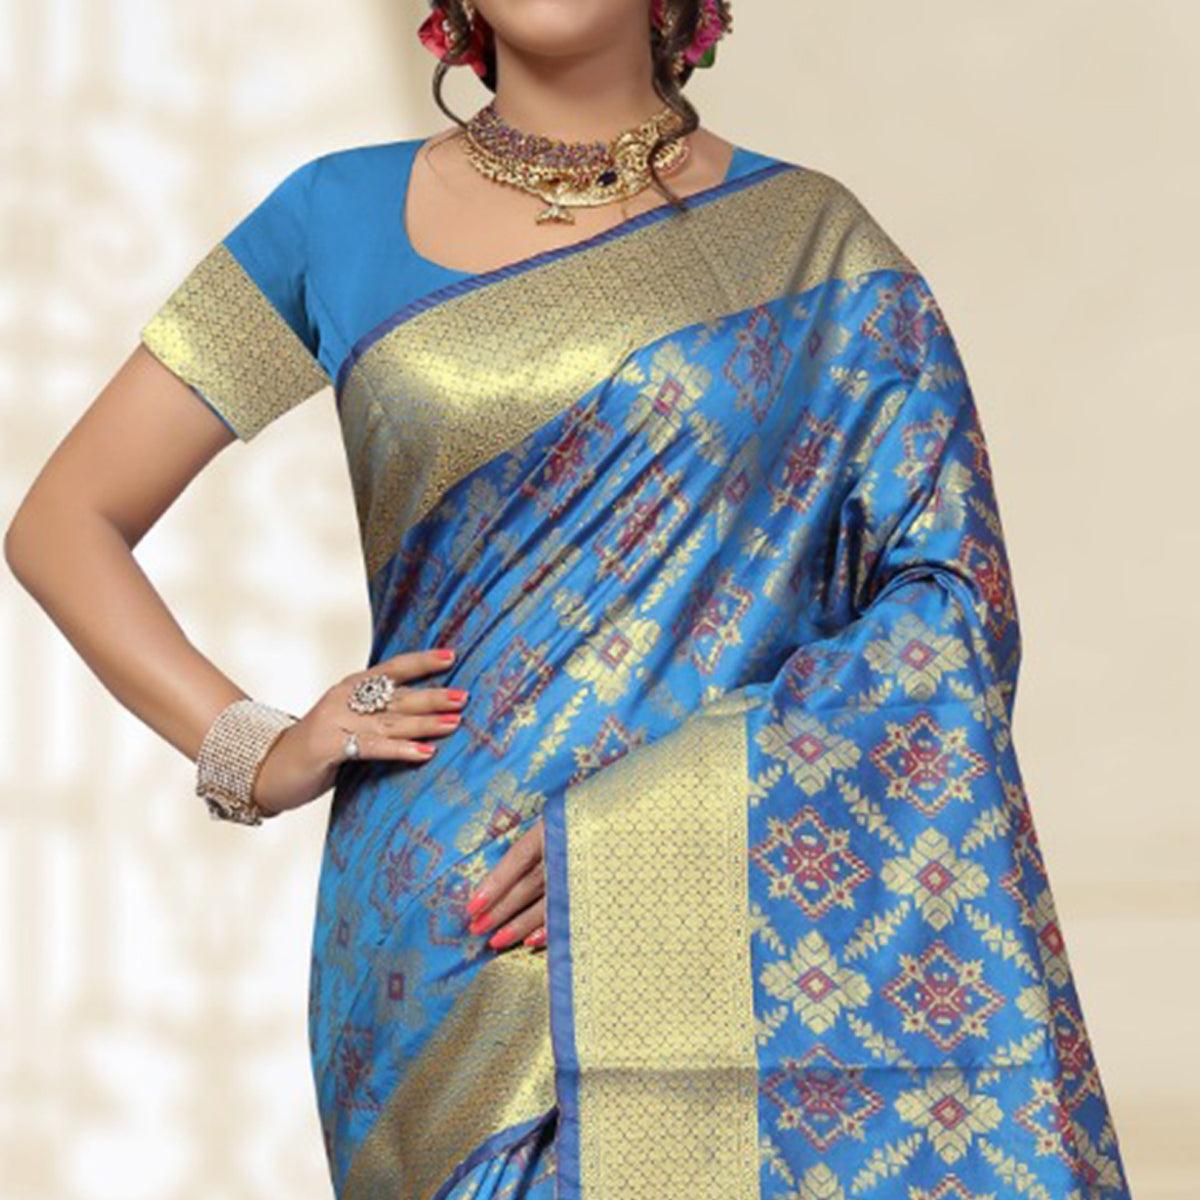 Delightful Blue Colored Festive Wear Woven Banarasi Silk Saree - Peachmode